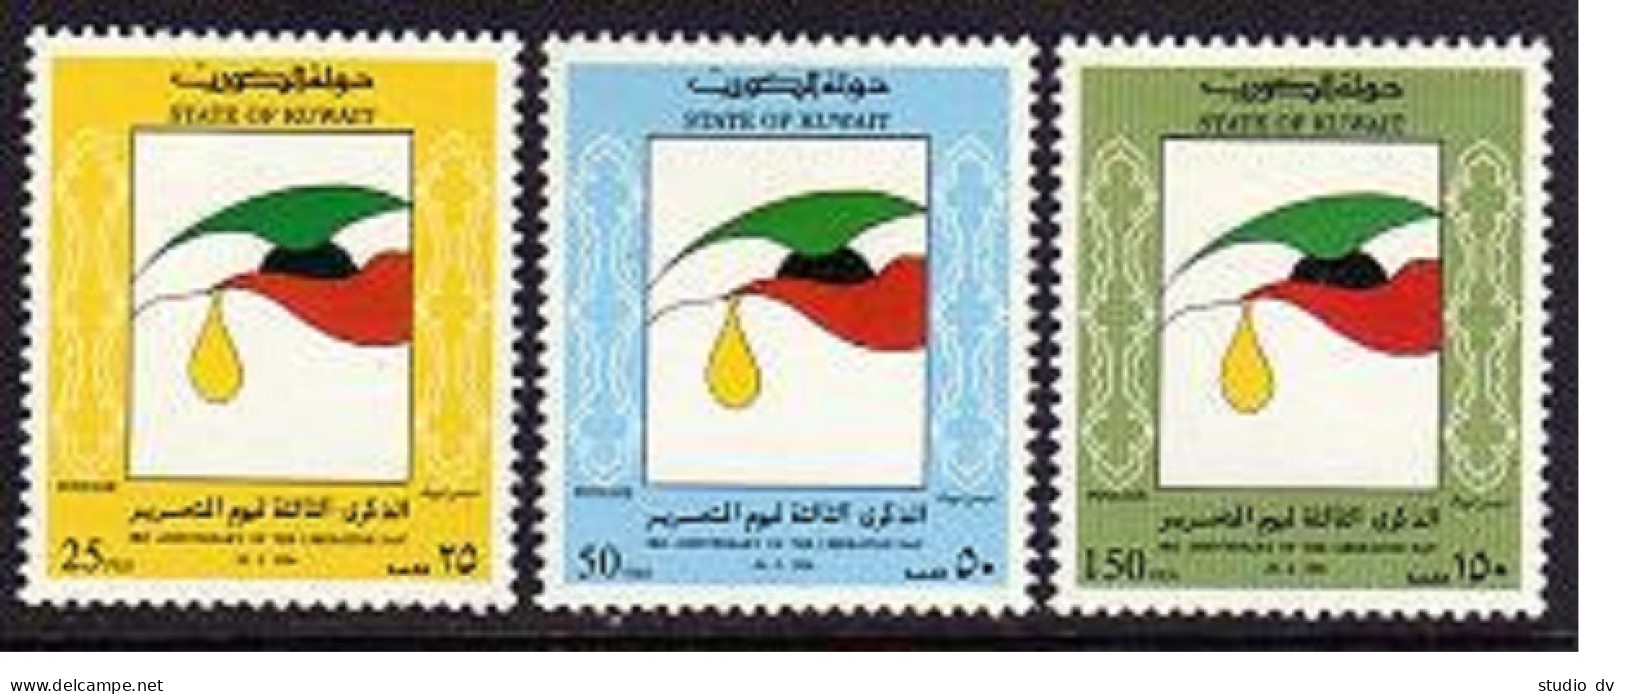 Kuwait 1228-1230, MNH. Michel 1360-1362. Liberation Day,3rd Ann. 1994. - Koweït